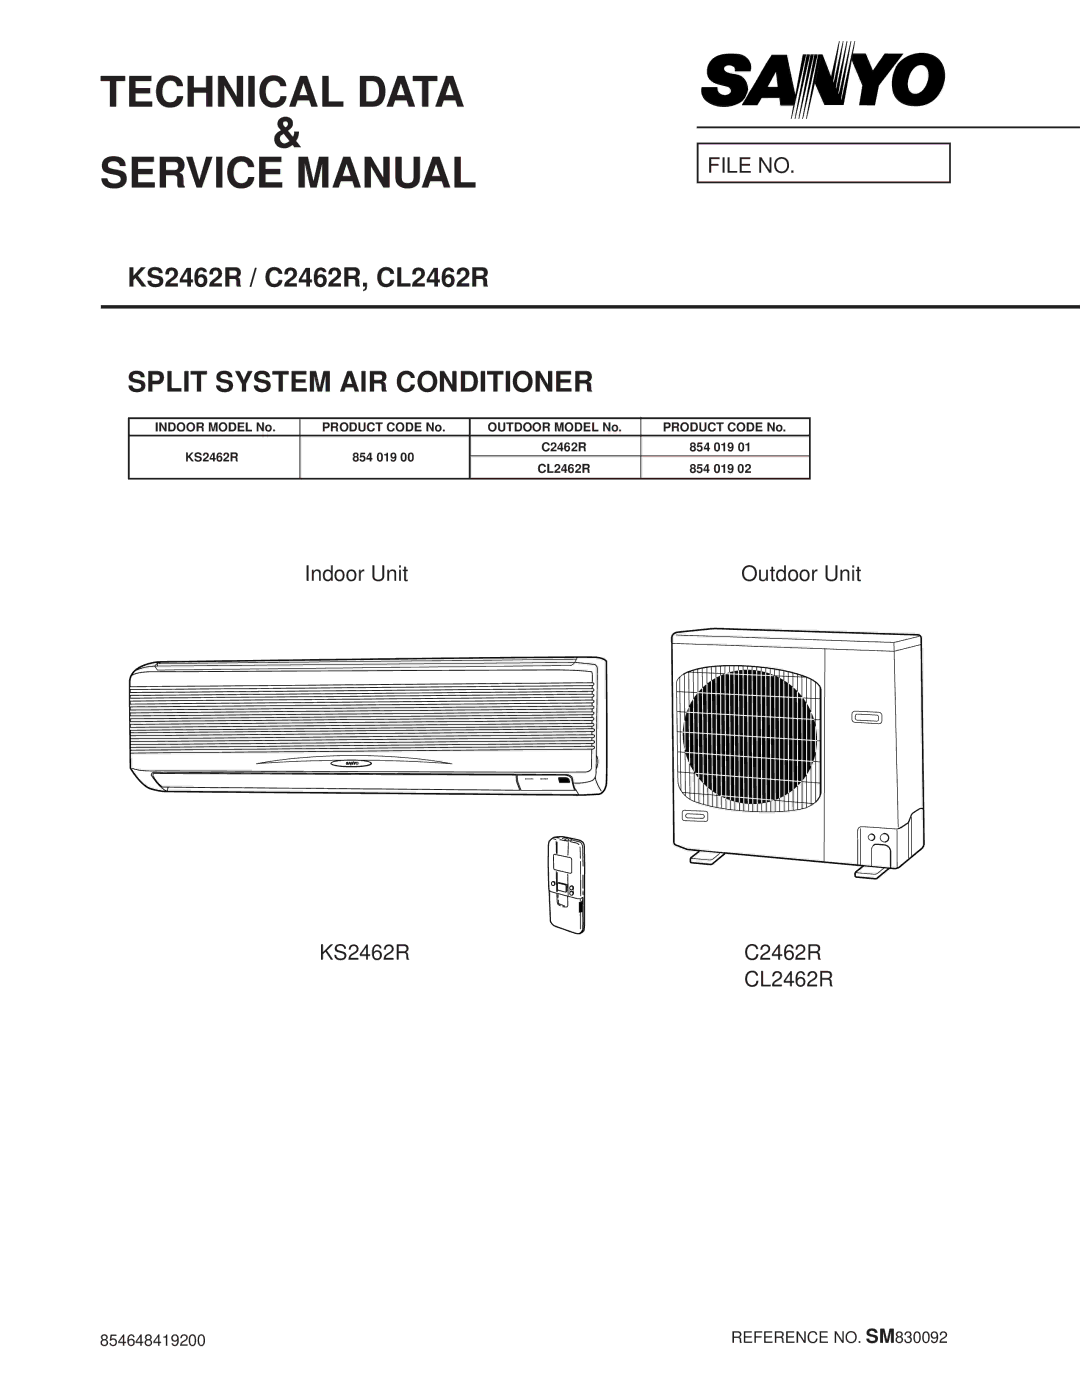 Sanyo service manual Technical Data, Indoor Unit Outdoor Unit KS2462R C2462R CL2462R 